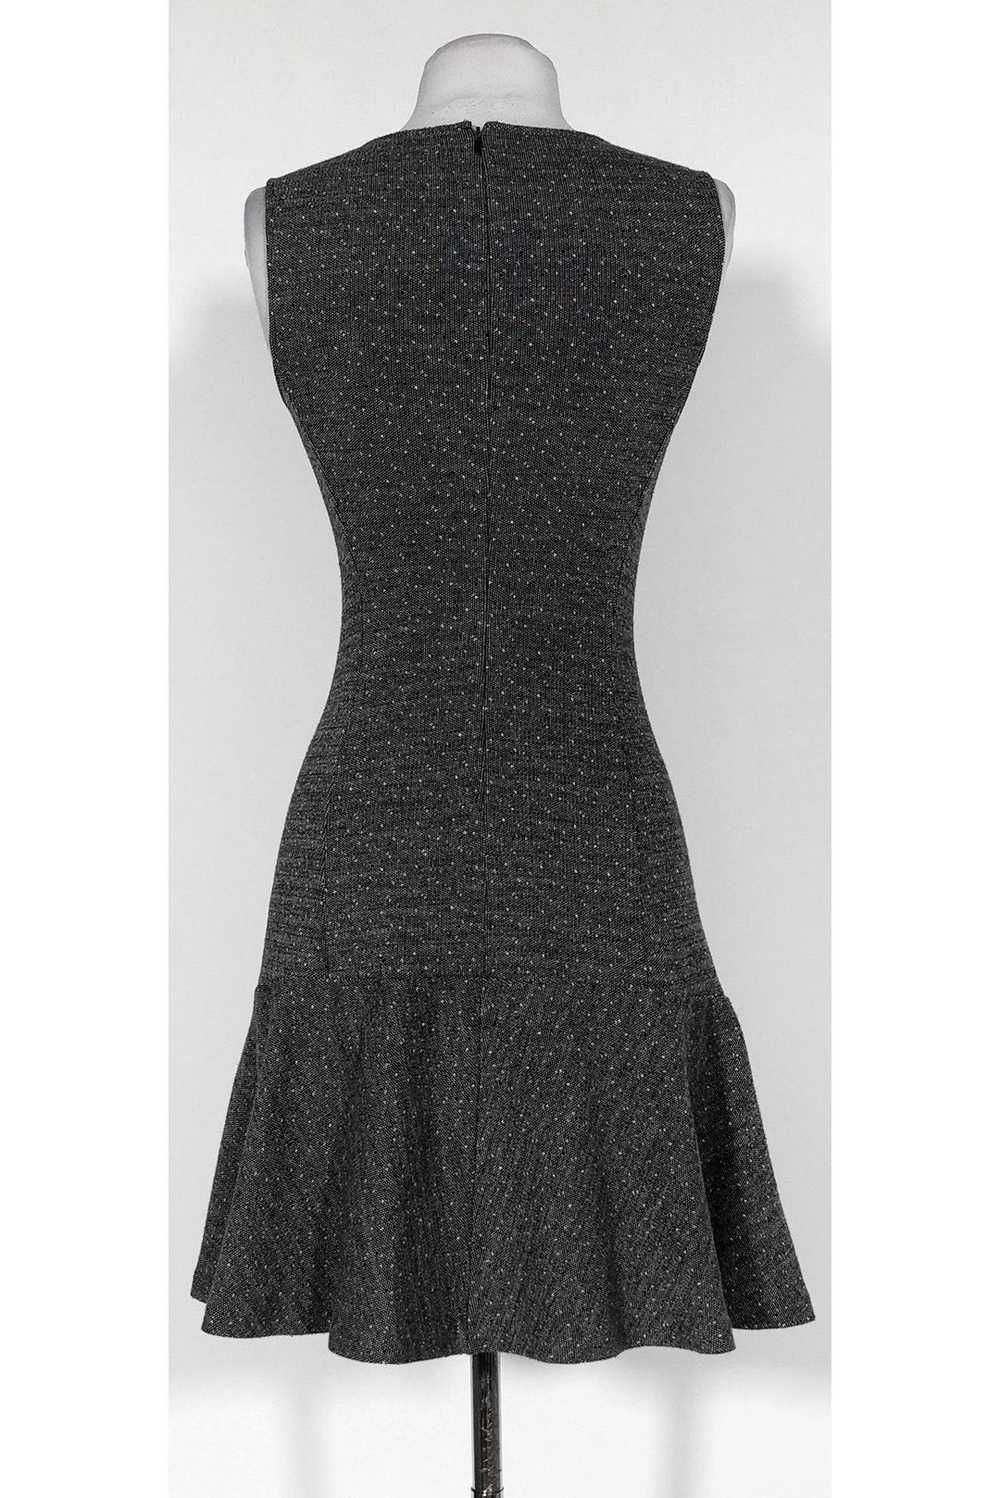 Theory - Black & Grey Fit & Flare Dress Sz 2 - image 3